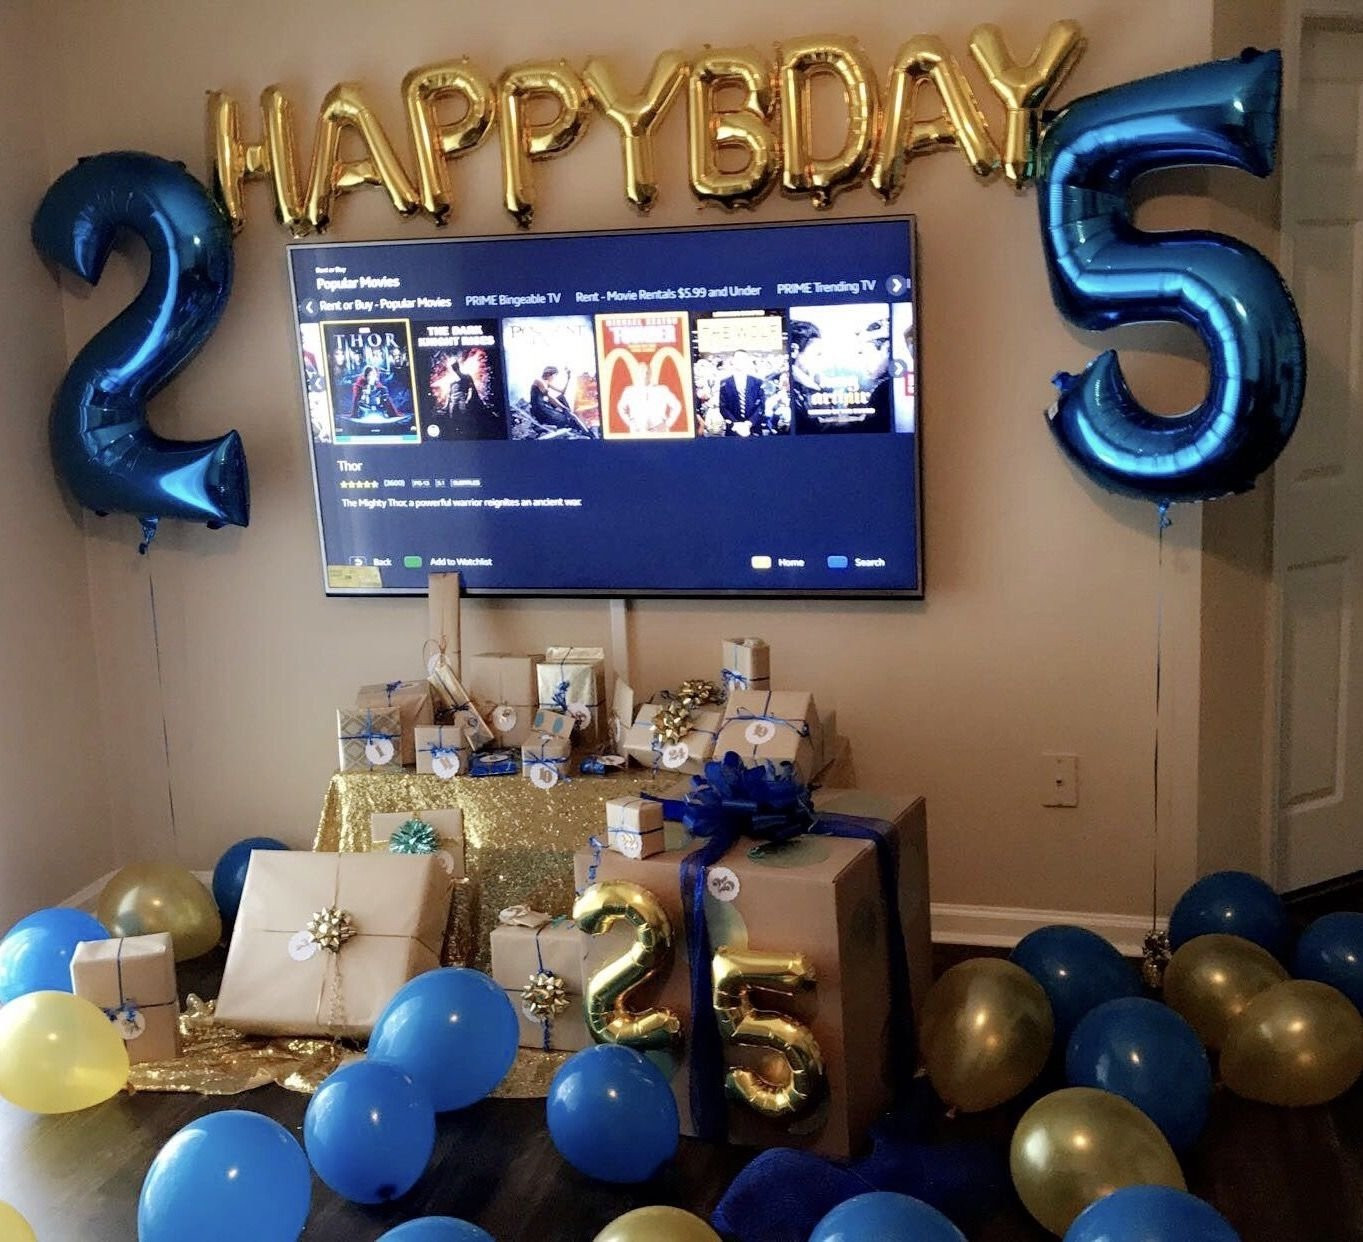 Bday Gift Ideas For Boyfriend
 10 Most Re mended 25Th Birthday Ideas For Boyfriend 2020